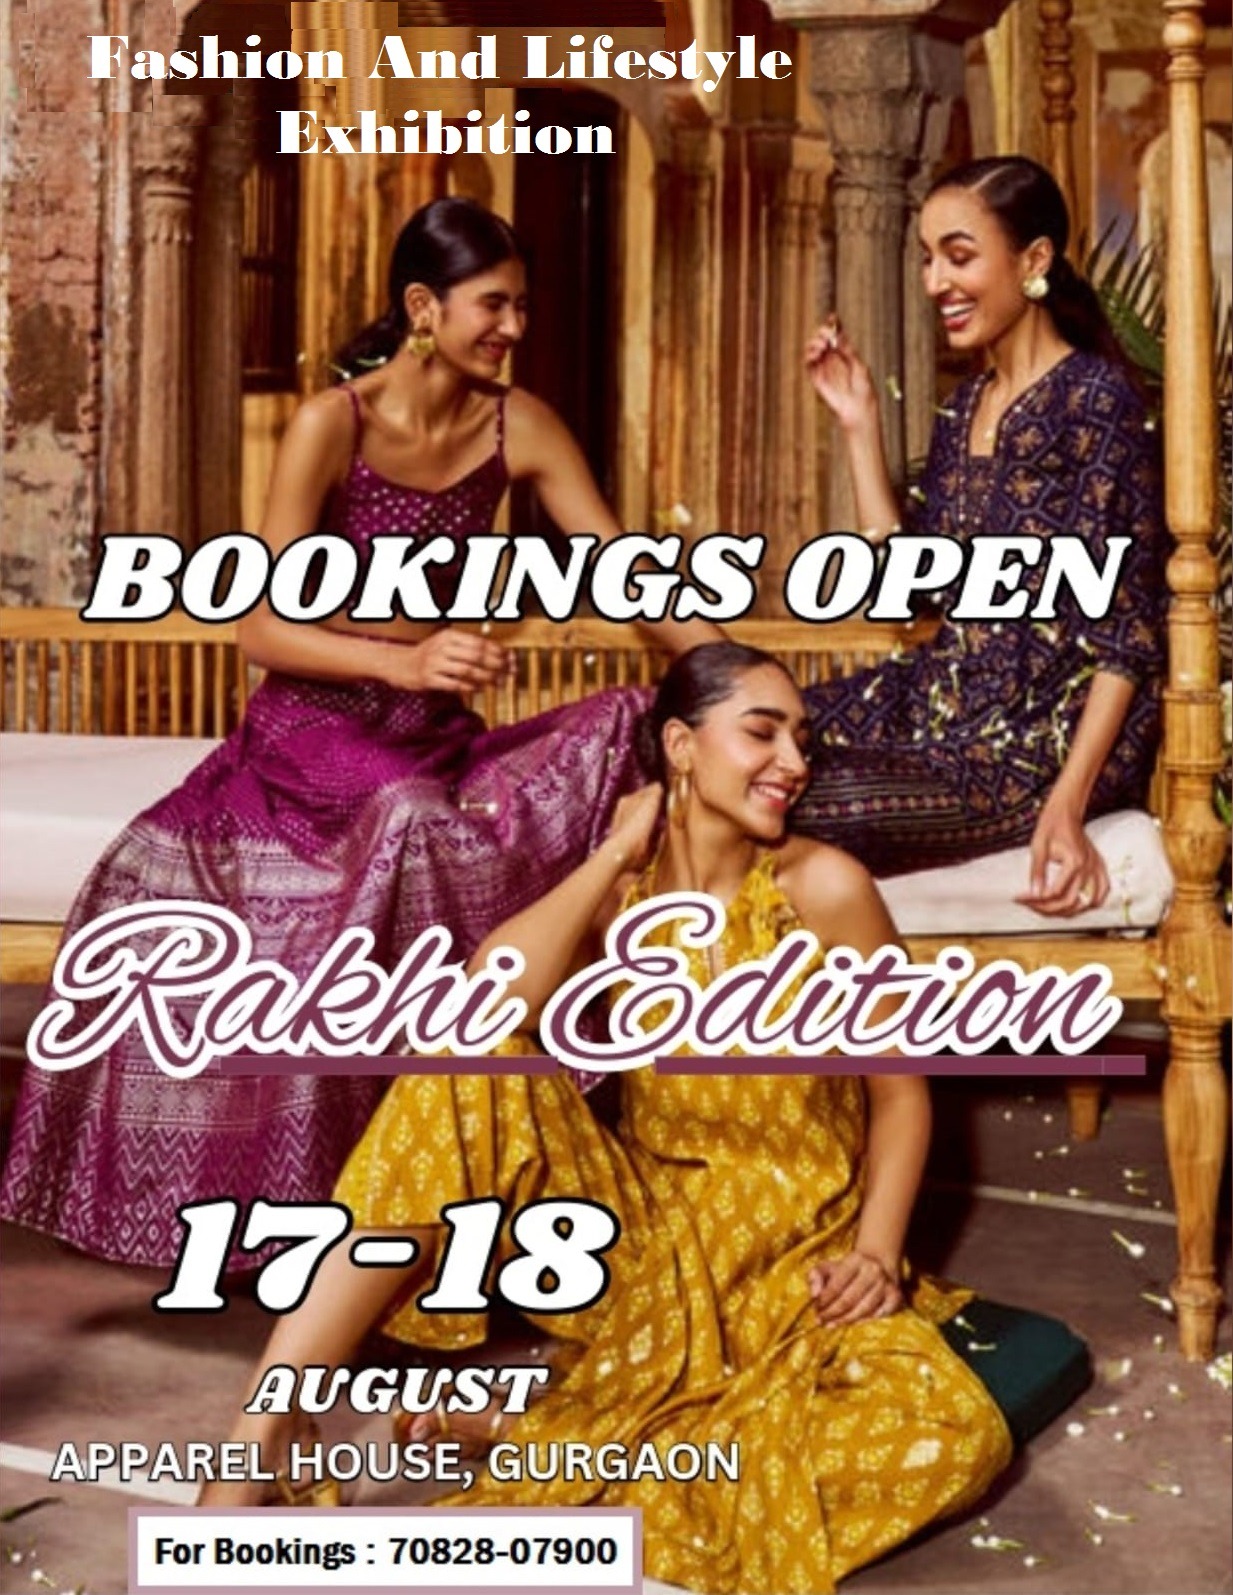 Rakhi Edition - Fashion & Lifestyle Exhibition